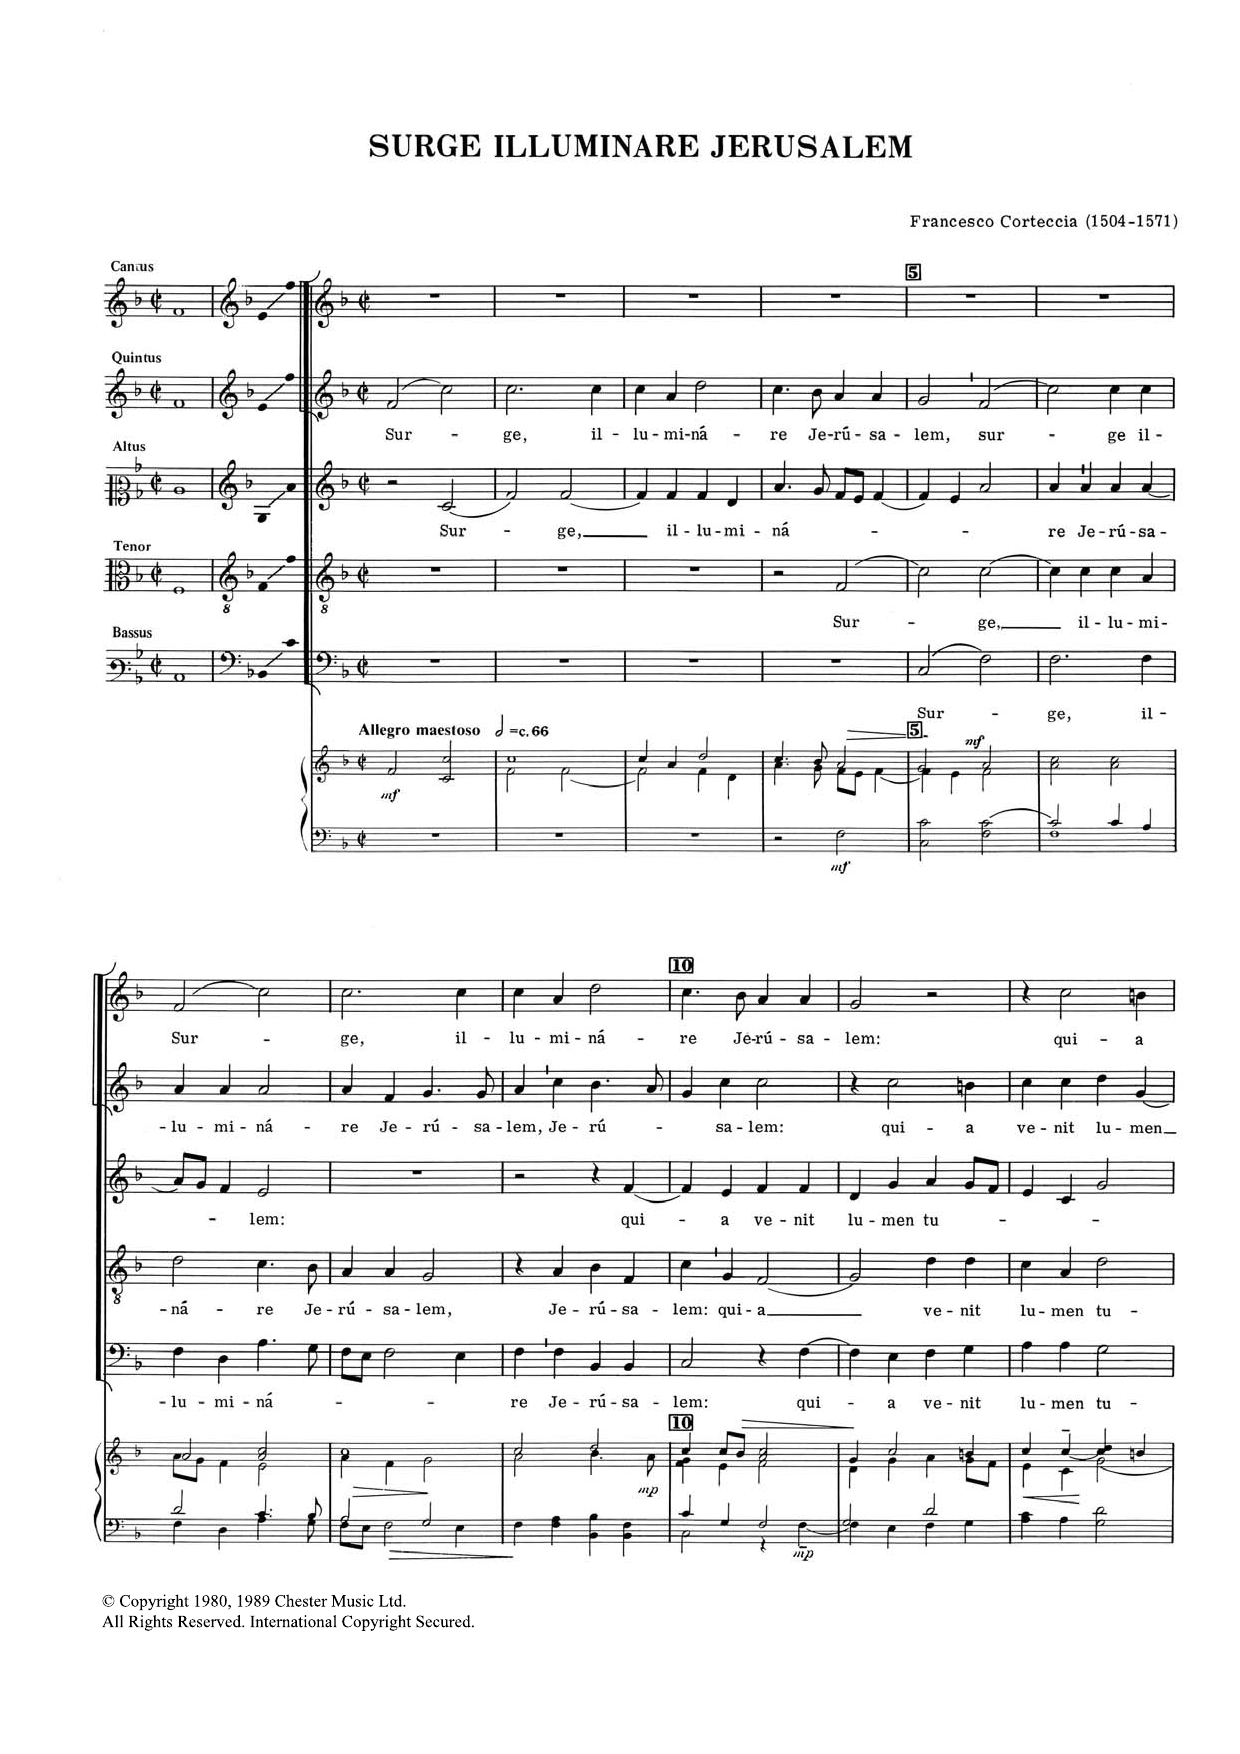 Francesco Corteccia Surge Illuminare Jerusalem Sheet Music Notes & Chords for Choral SAATB - Download or Print PDF